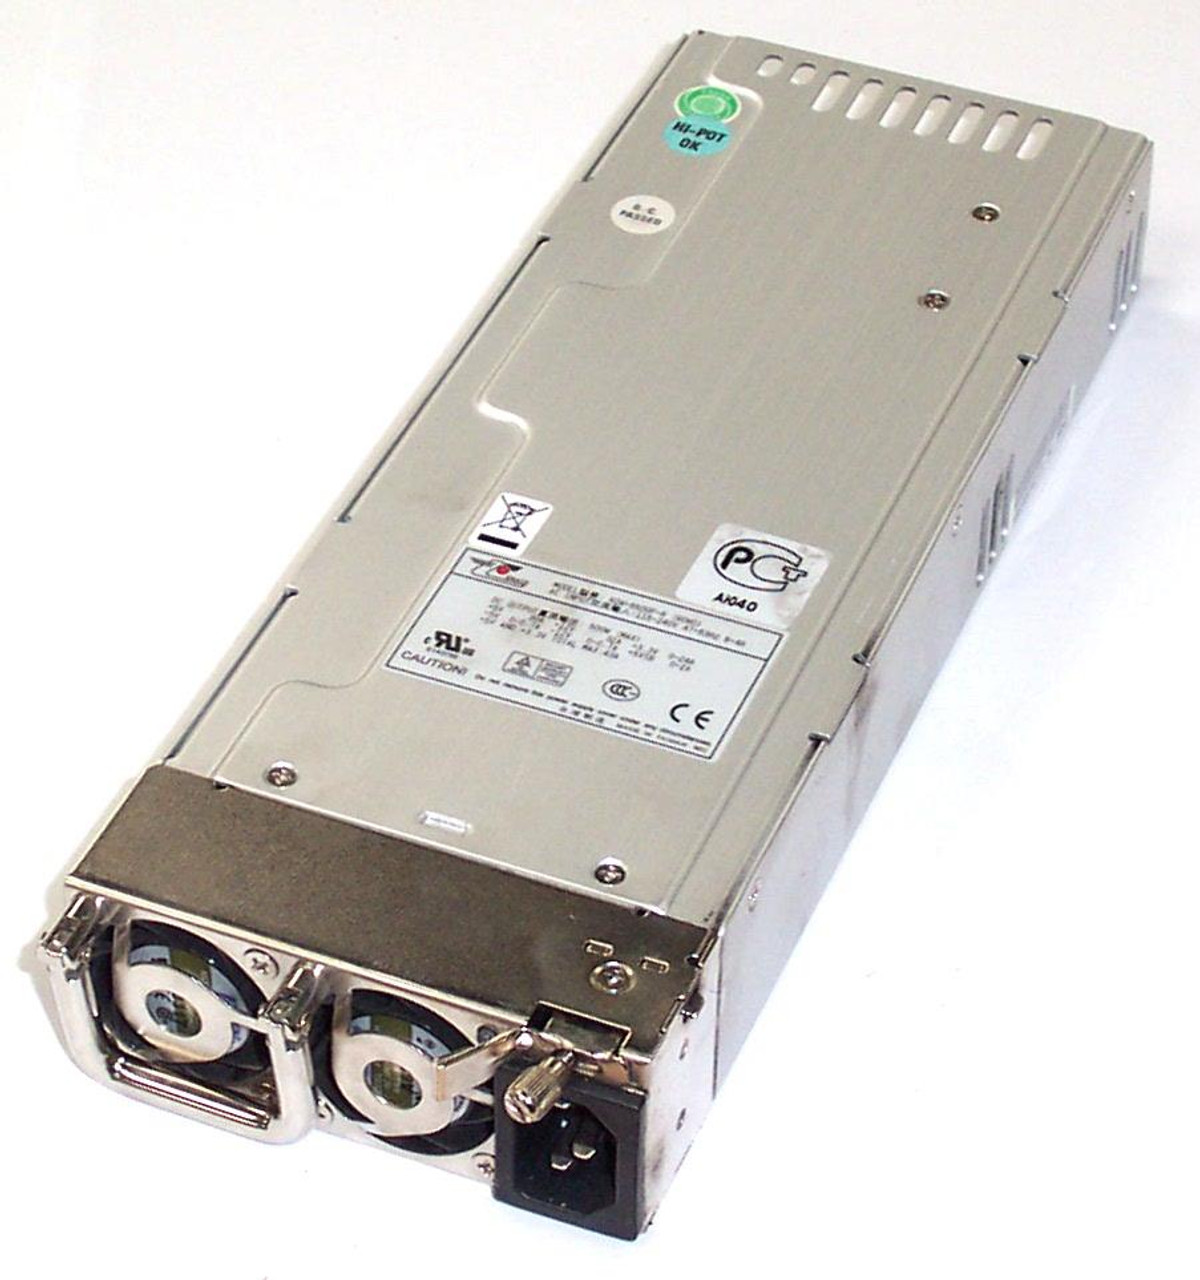 R2W-6500P Emacs 500 Watts Redundant 2U Power Supply (Refurbished)